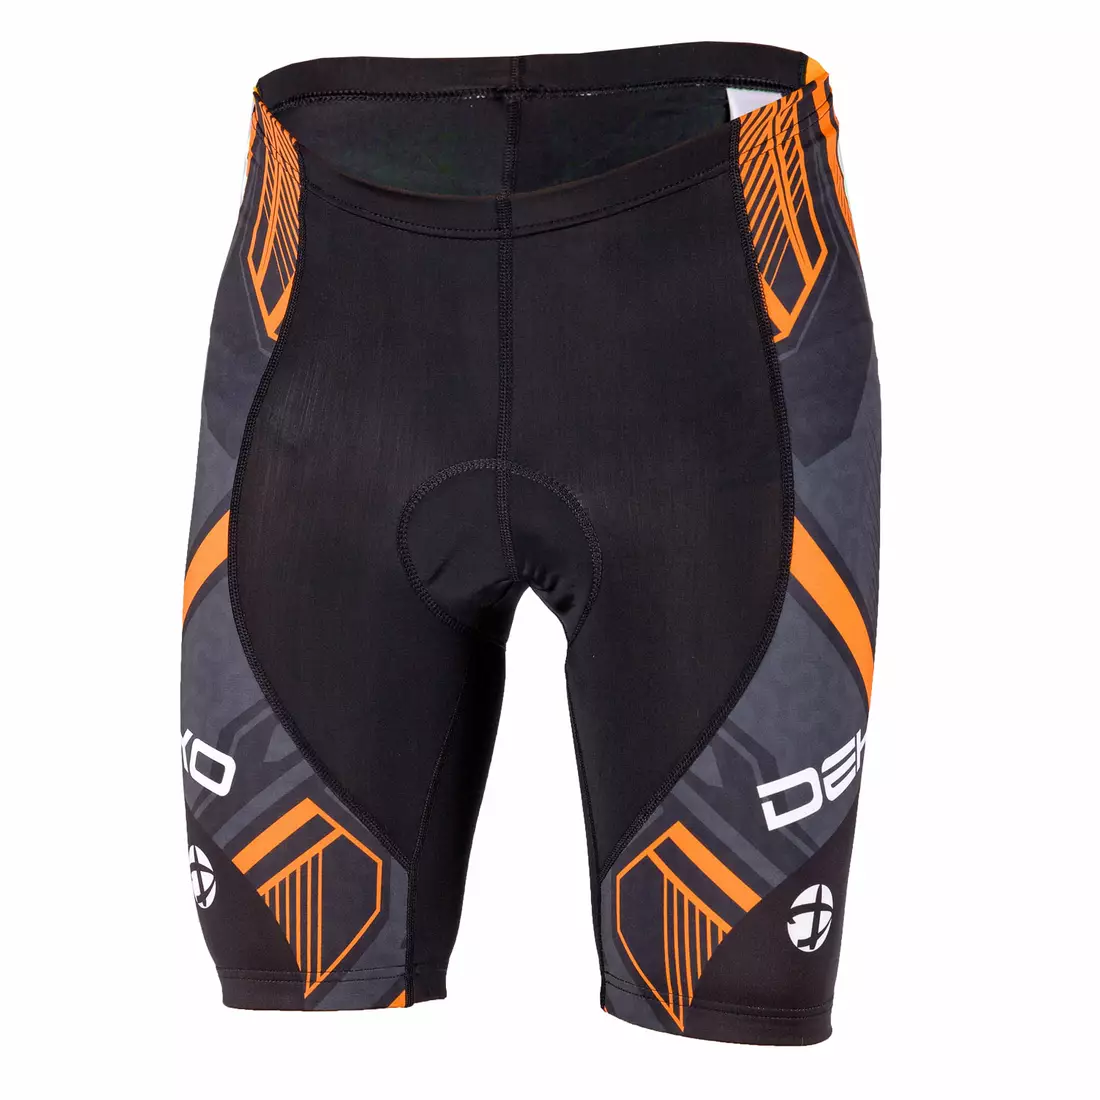 DEKO men's cycling shorts GEL orange DK-2020-005